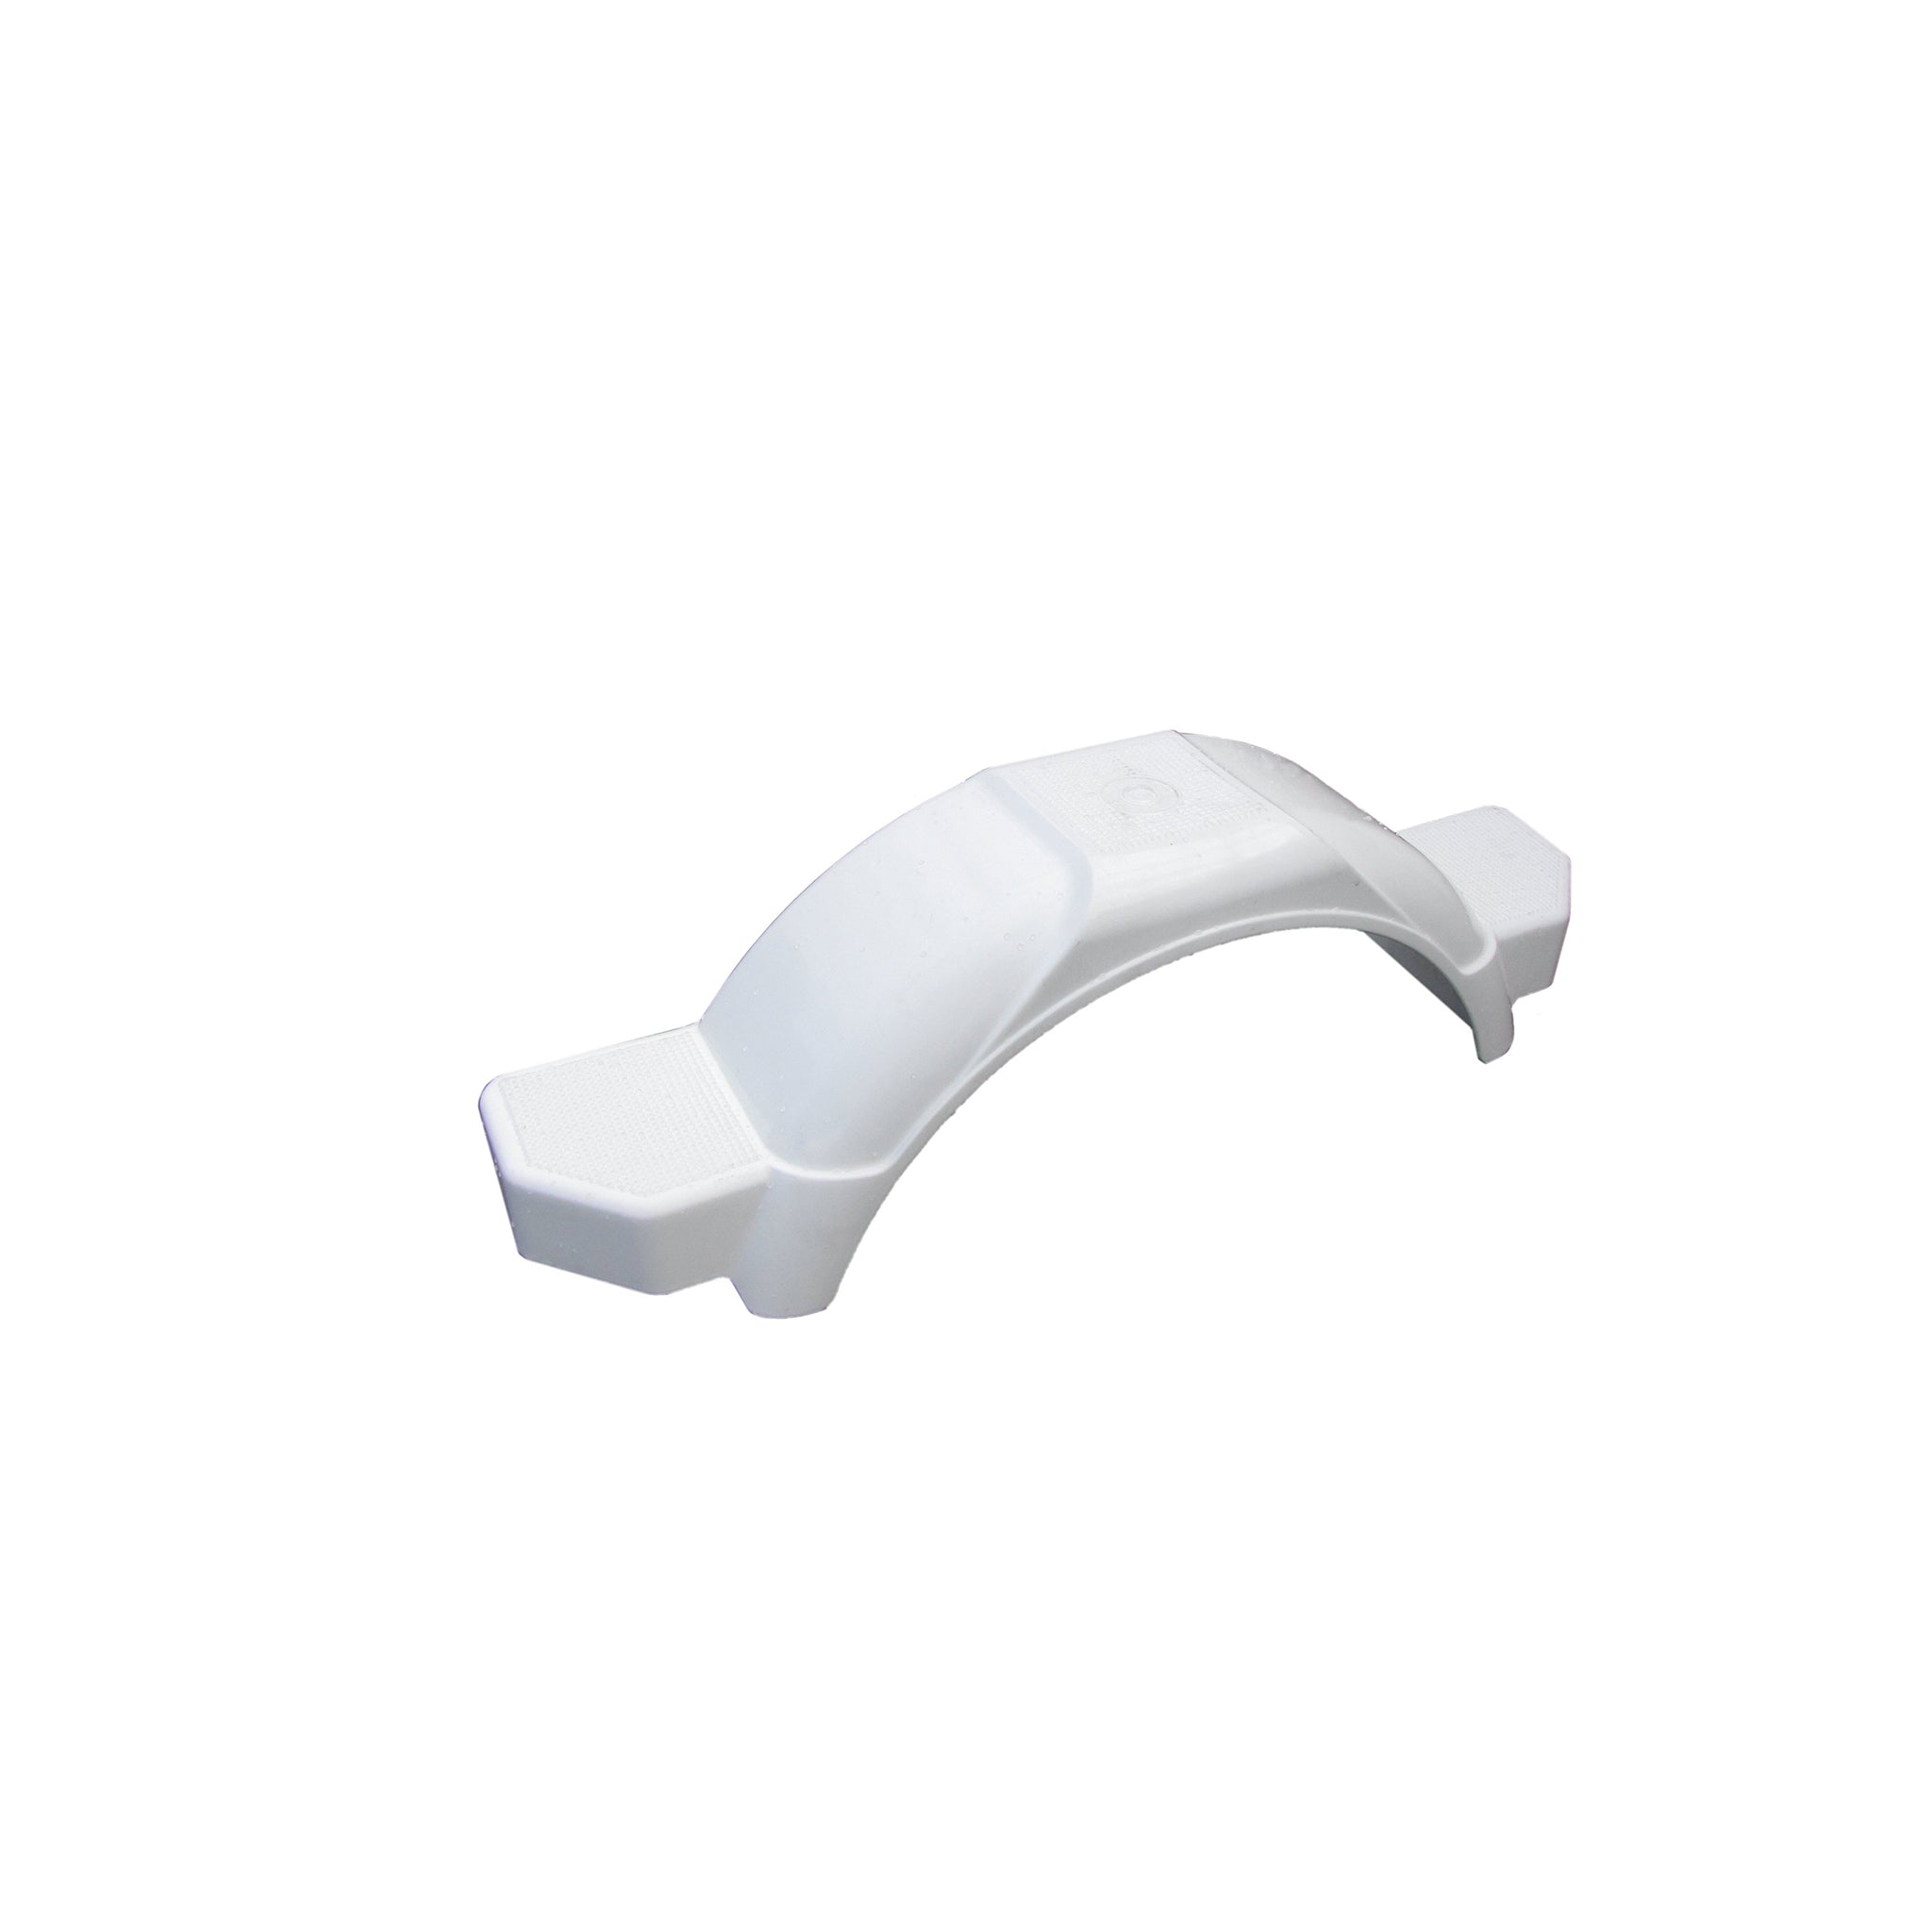 Plastic mudguard 9-10 inch - white